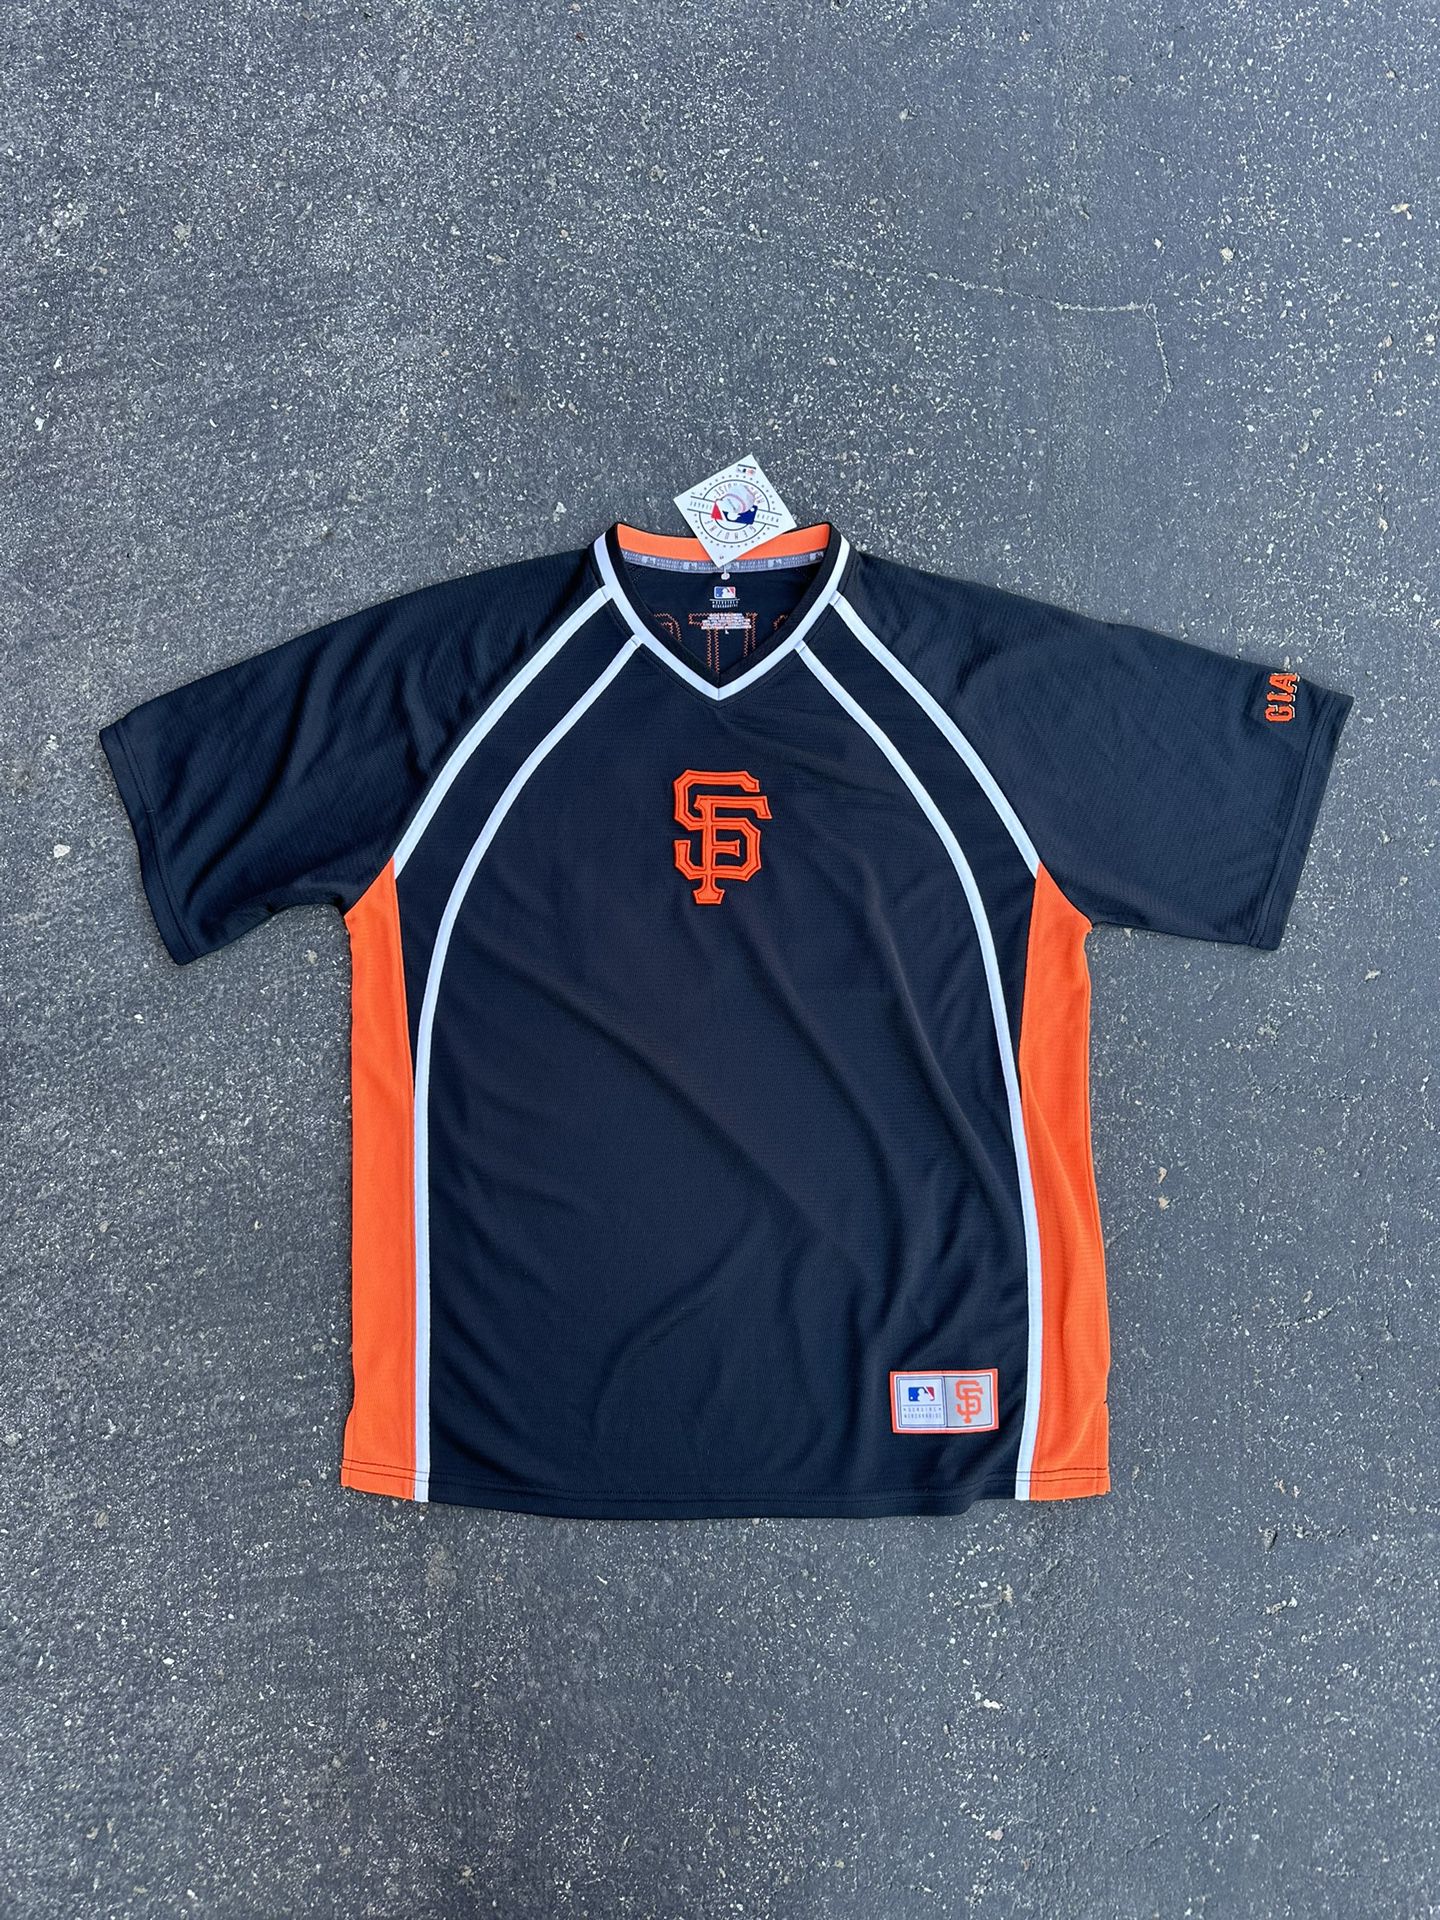 San Francisco Giants Barry Zito Black Jersey Shirt Men's Size  L